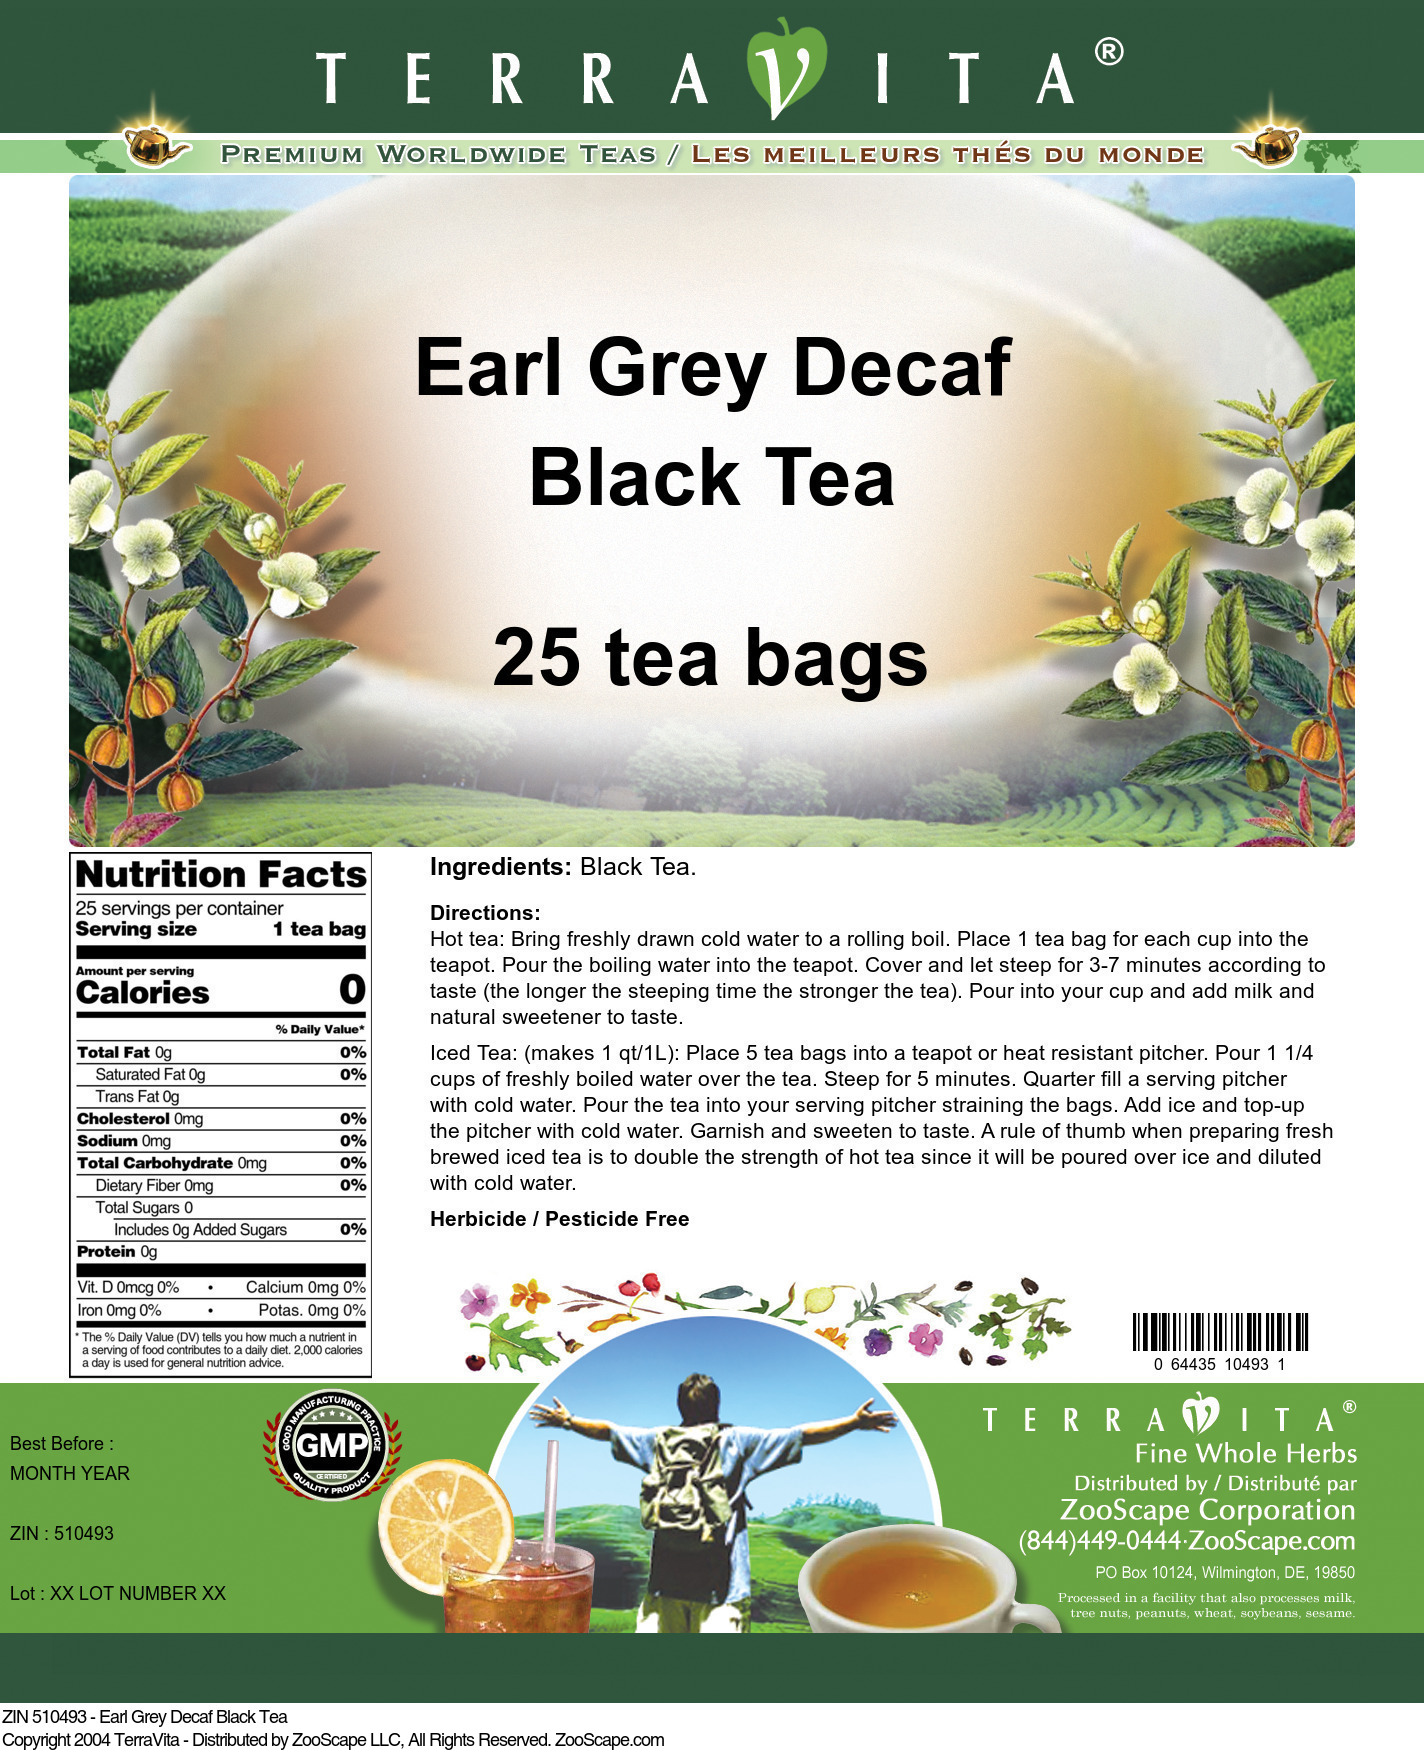 Earl Grey Decaf Black Tea - Label